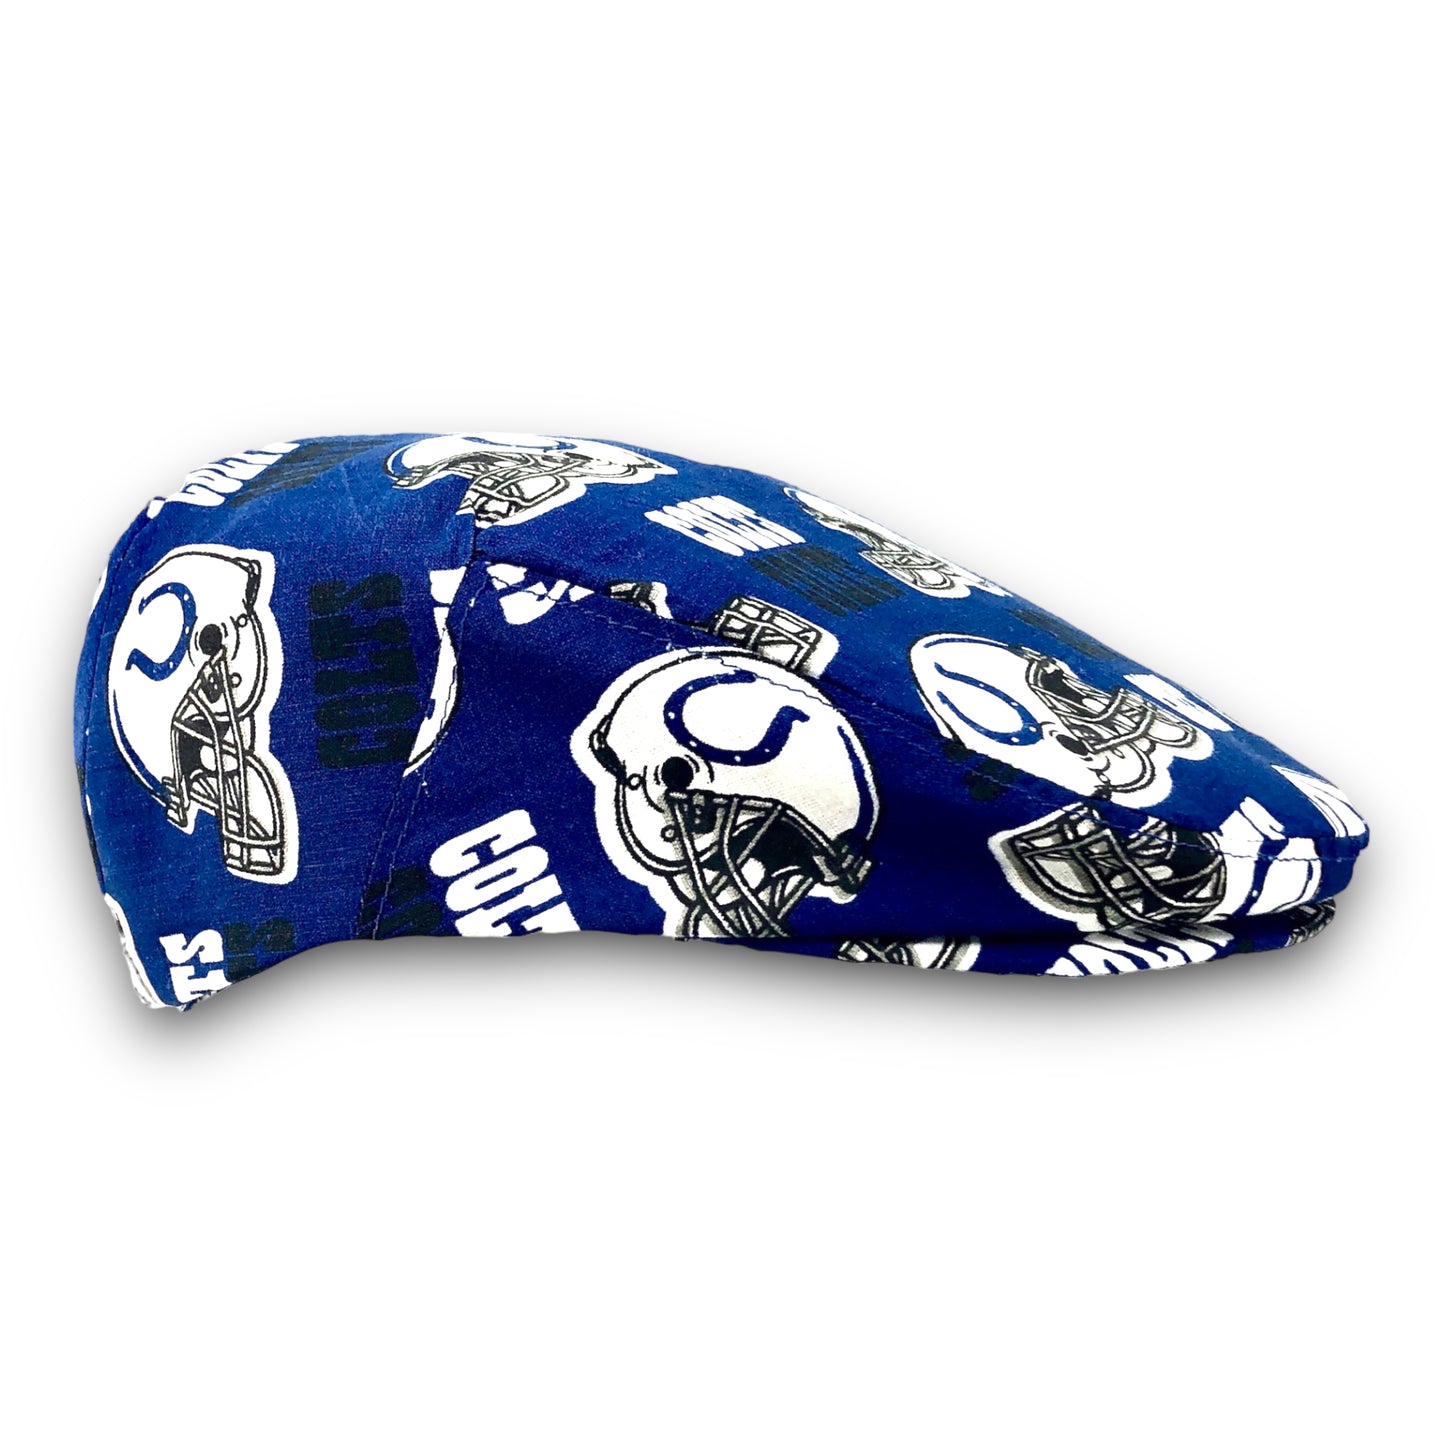 Custom Handmade Jeff Cap in Indianapolis Colts Print Fabric